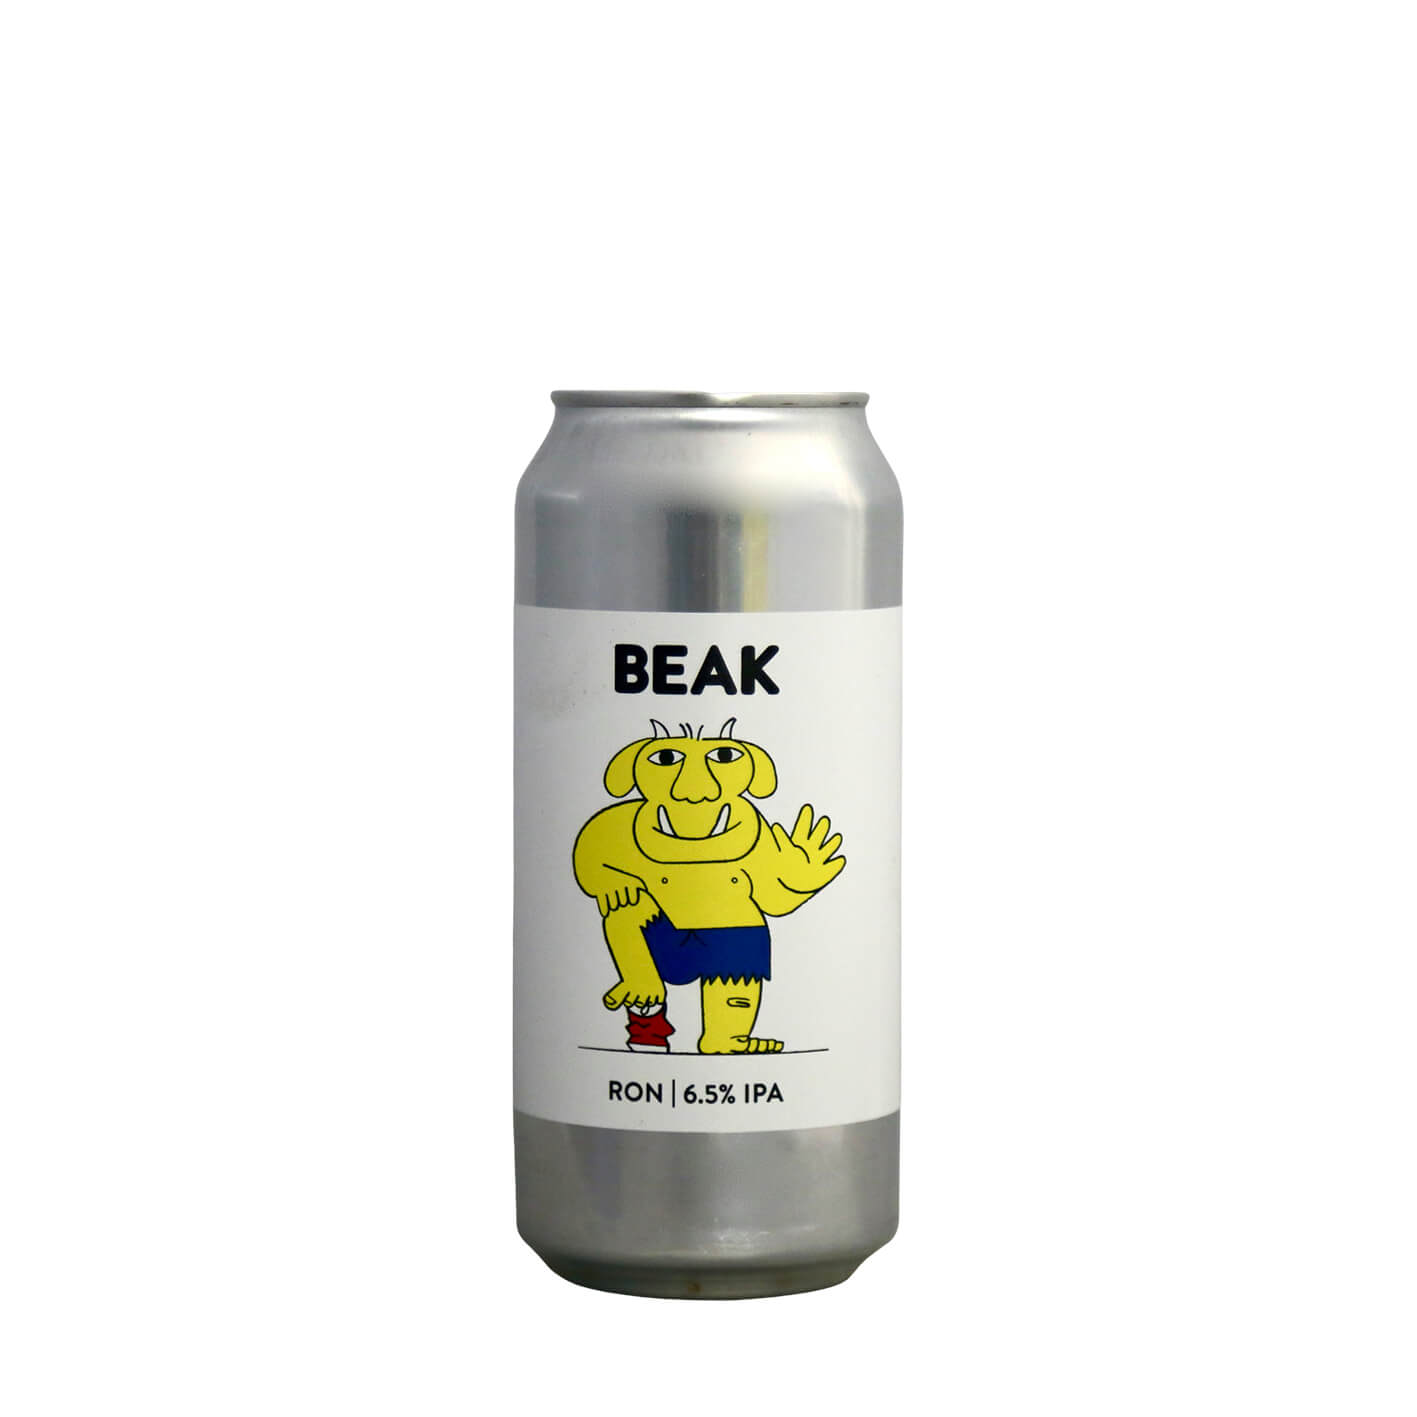 Beak Brewery / Allkin – Ron IPA | Buy Online